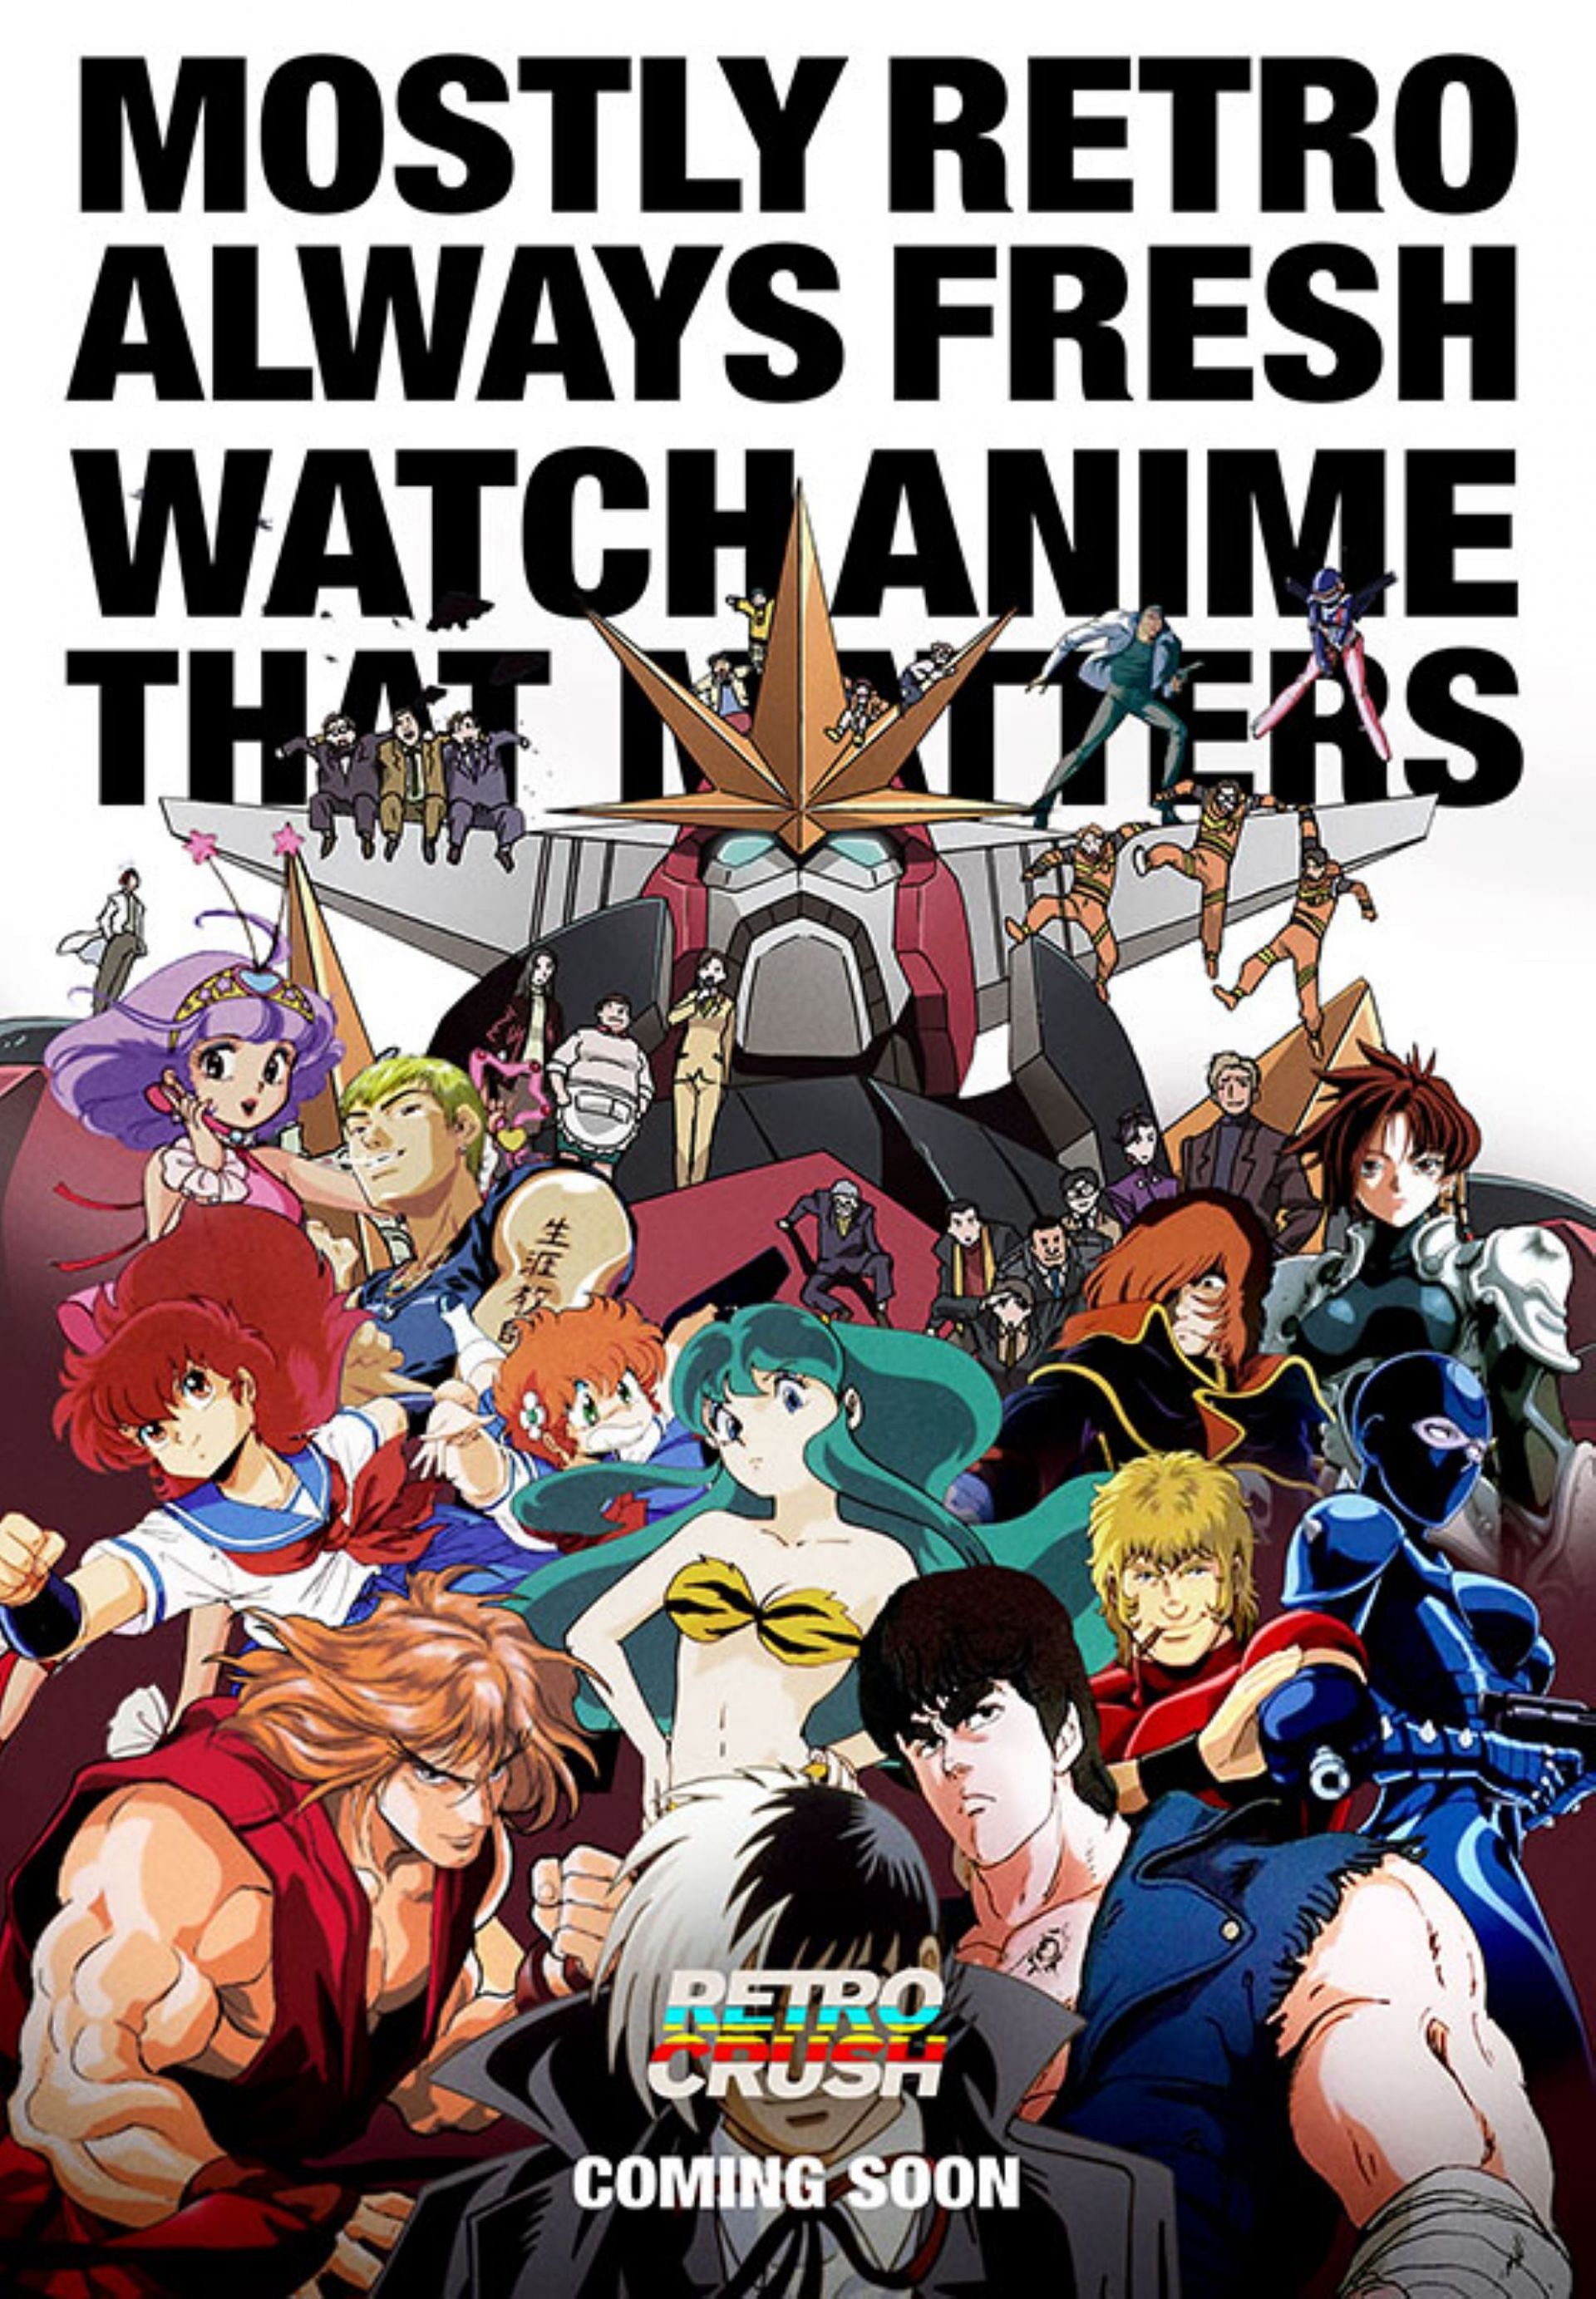 Isekai takes over anime – The Highlander